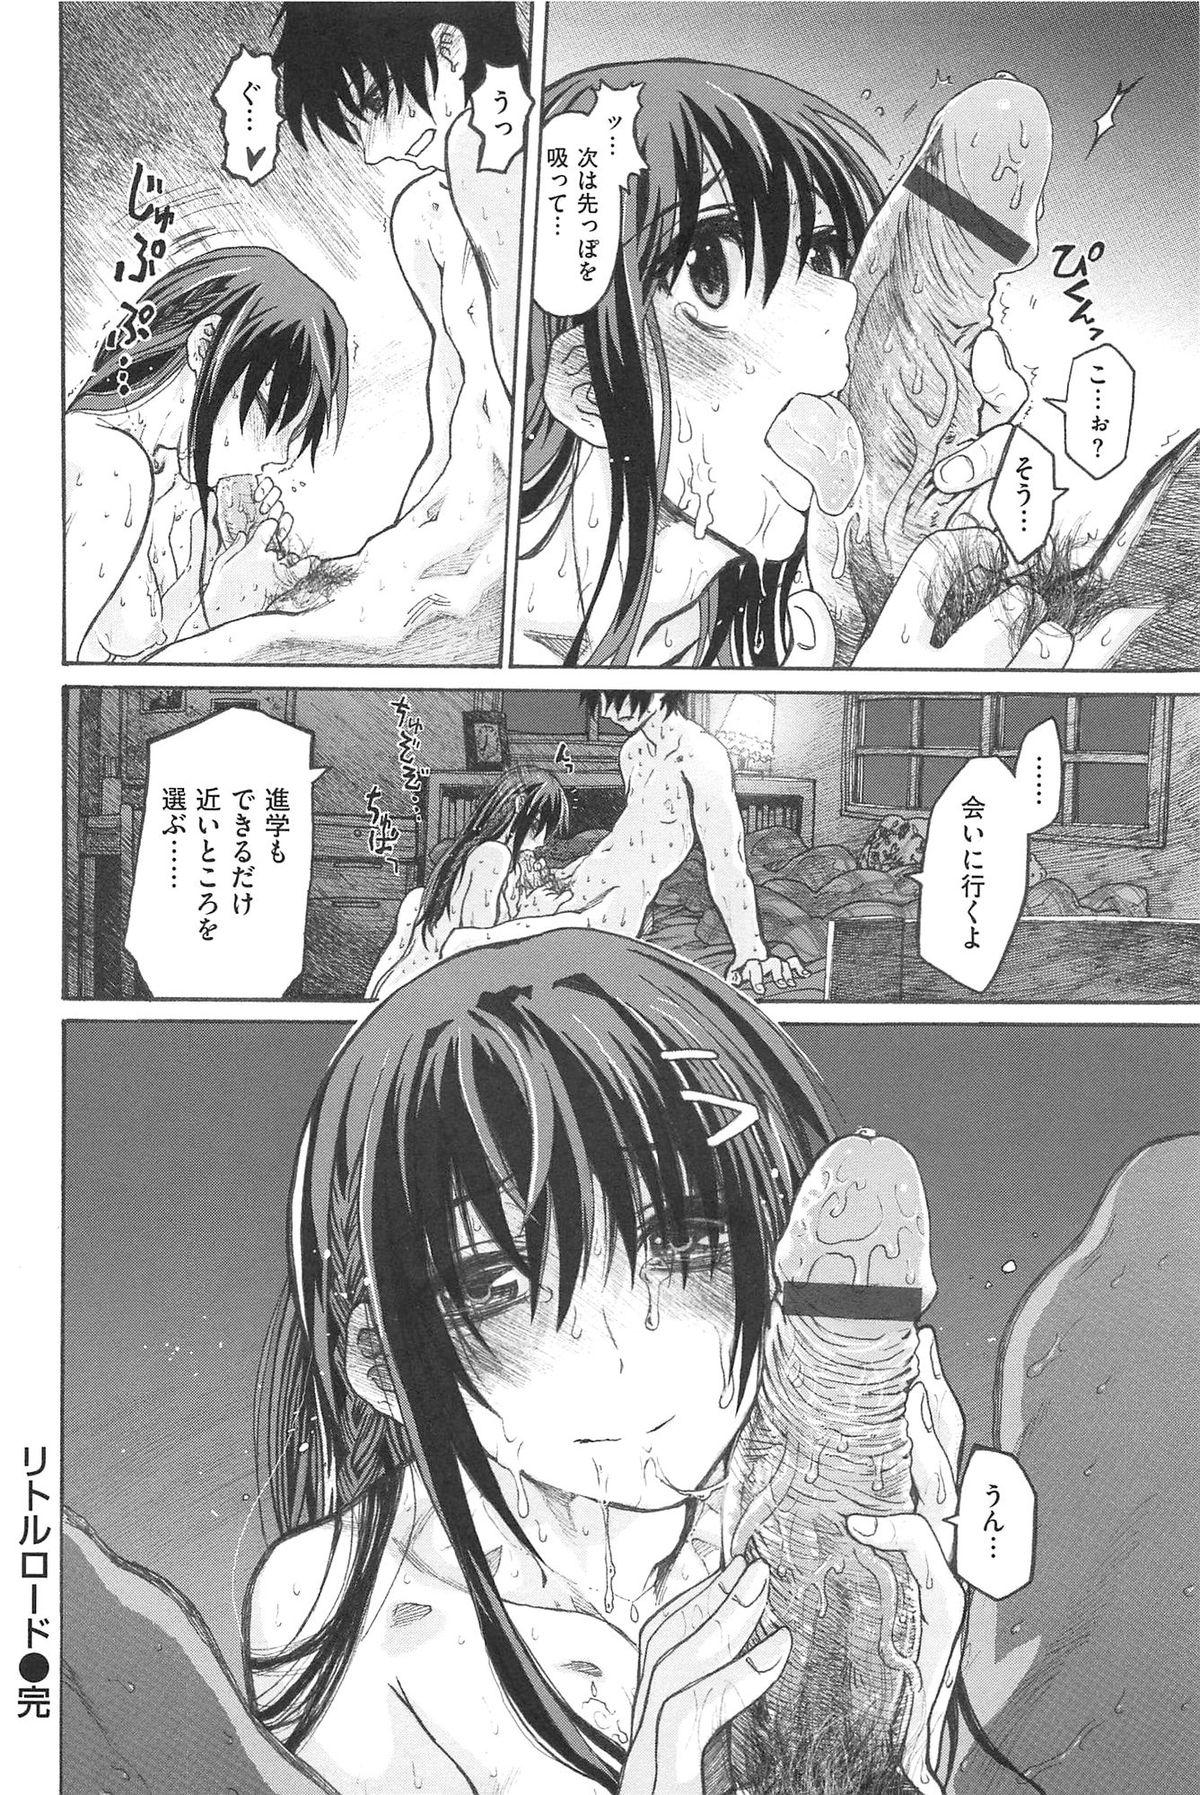 [Dagashi] Junketsu no Owaru Hibi (Beautiful Days of Losing Virginity) … (WANI MAGAZINE COMICS SPECIAL) 62